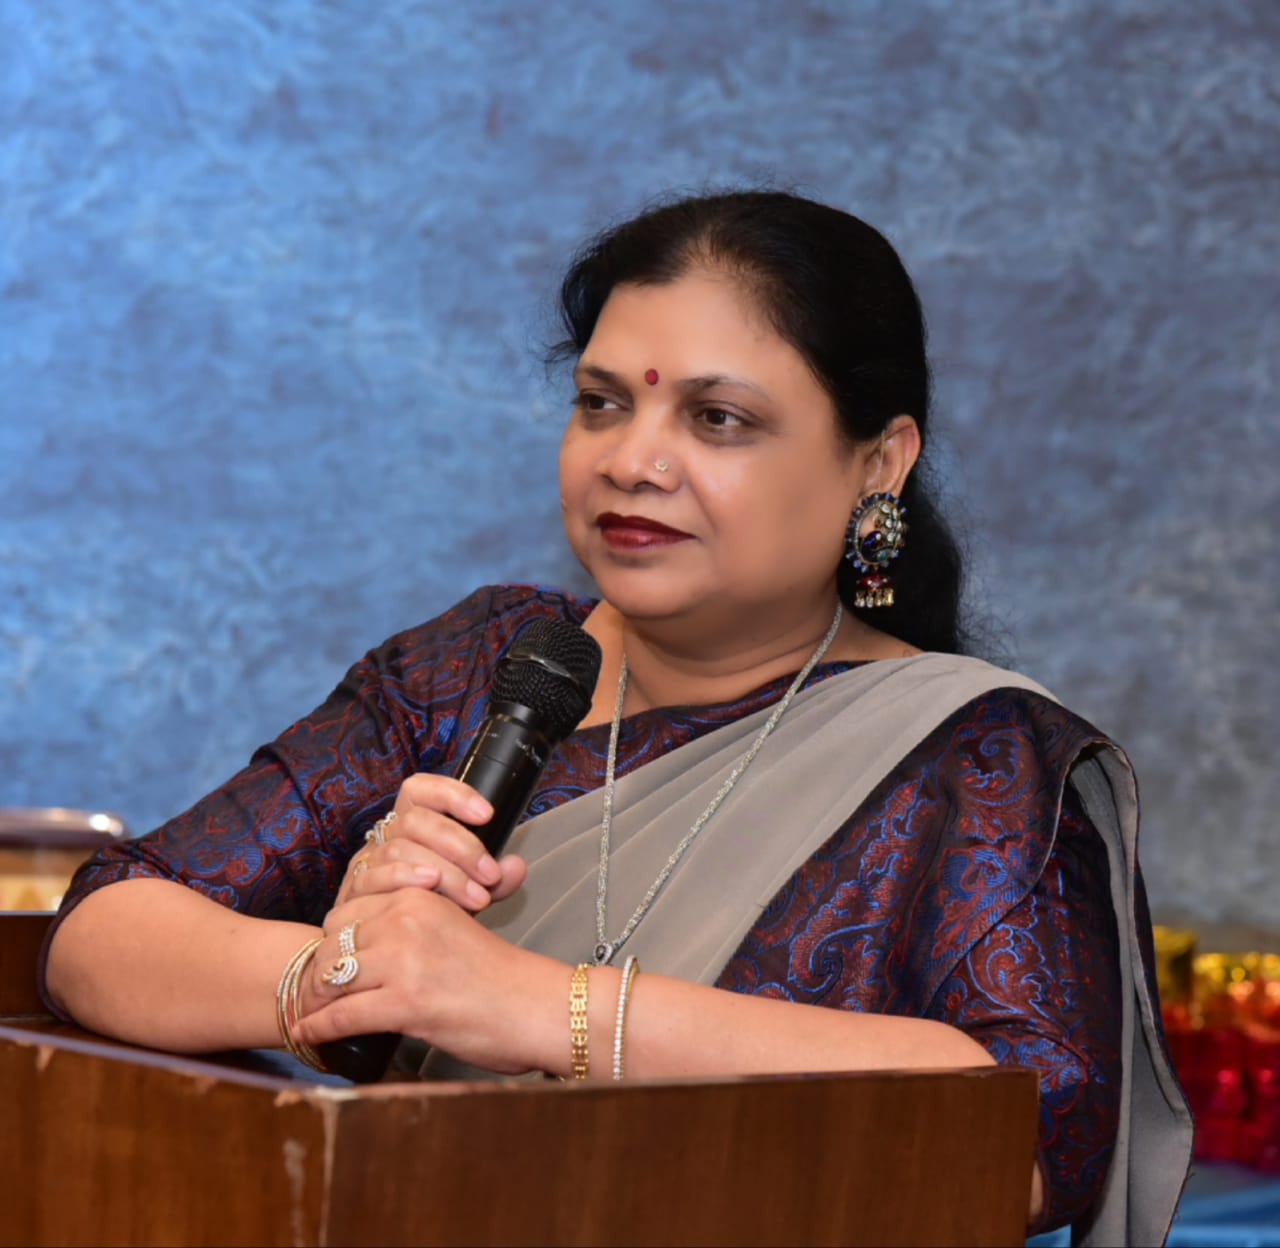 अखिल भारतीय अग्रवाल महिला सम्मेलन की नव नियुक्त अध्यक्ष श्रीमती अनिता अग्रवाल ने महिला सम्मेलन की प्रादेशिक टीम की घोषित प्रत्येक जिले को मिला प्रतिनिधित्व